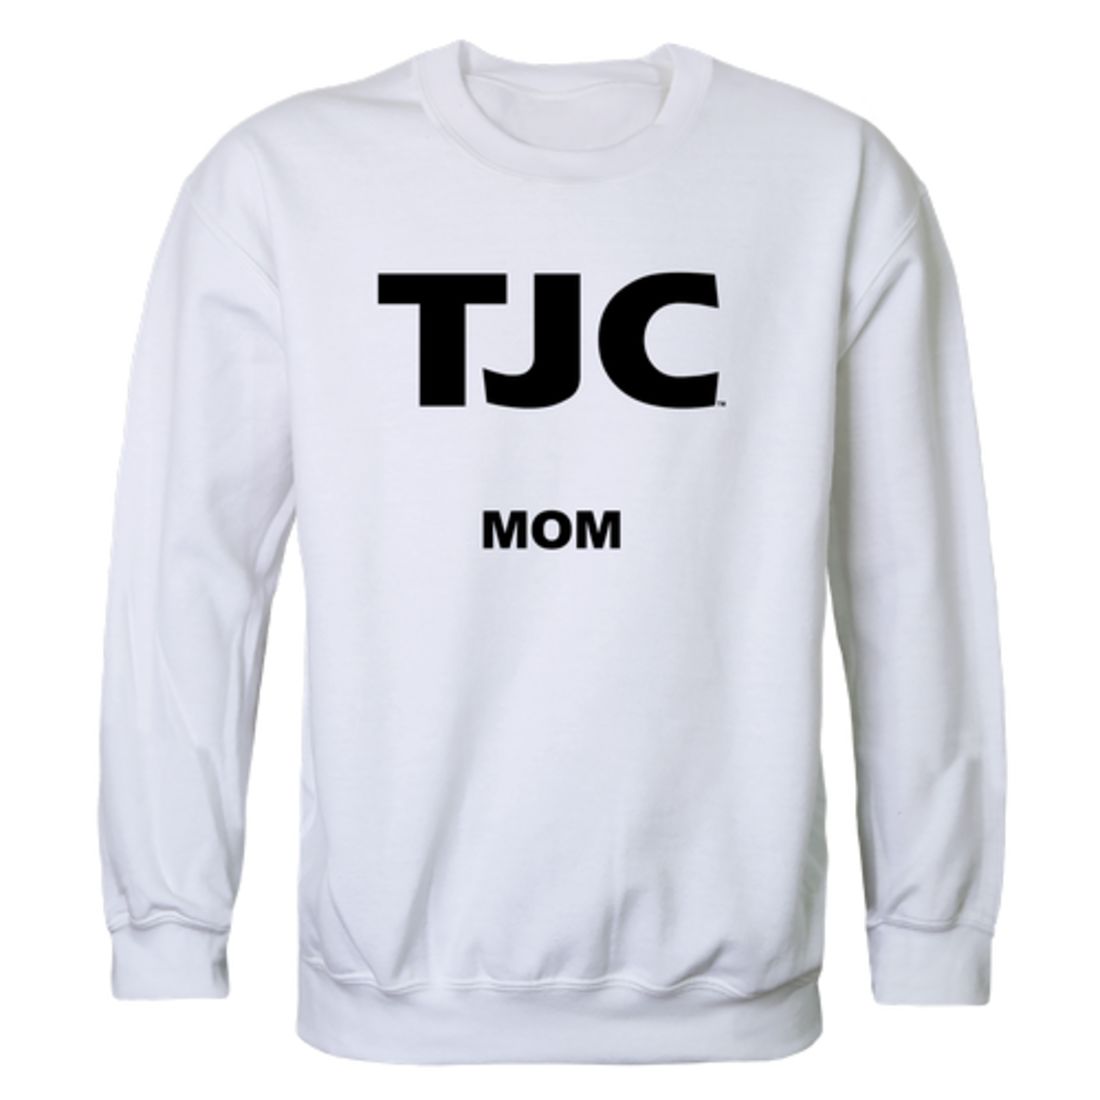 Tyler Junior College Apaches Mom Crewneck Sweatshirt